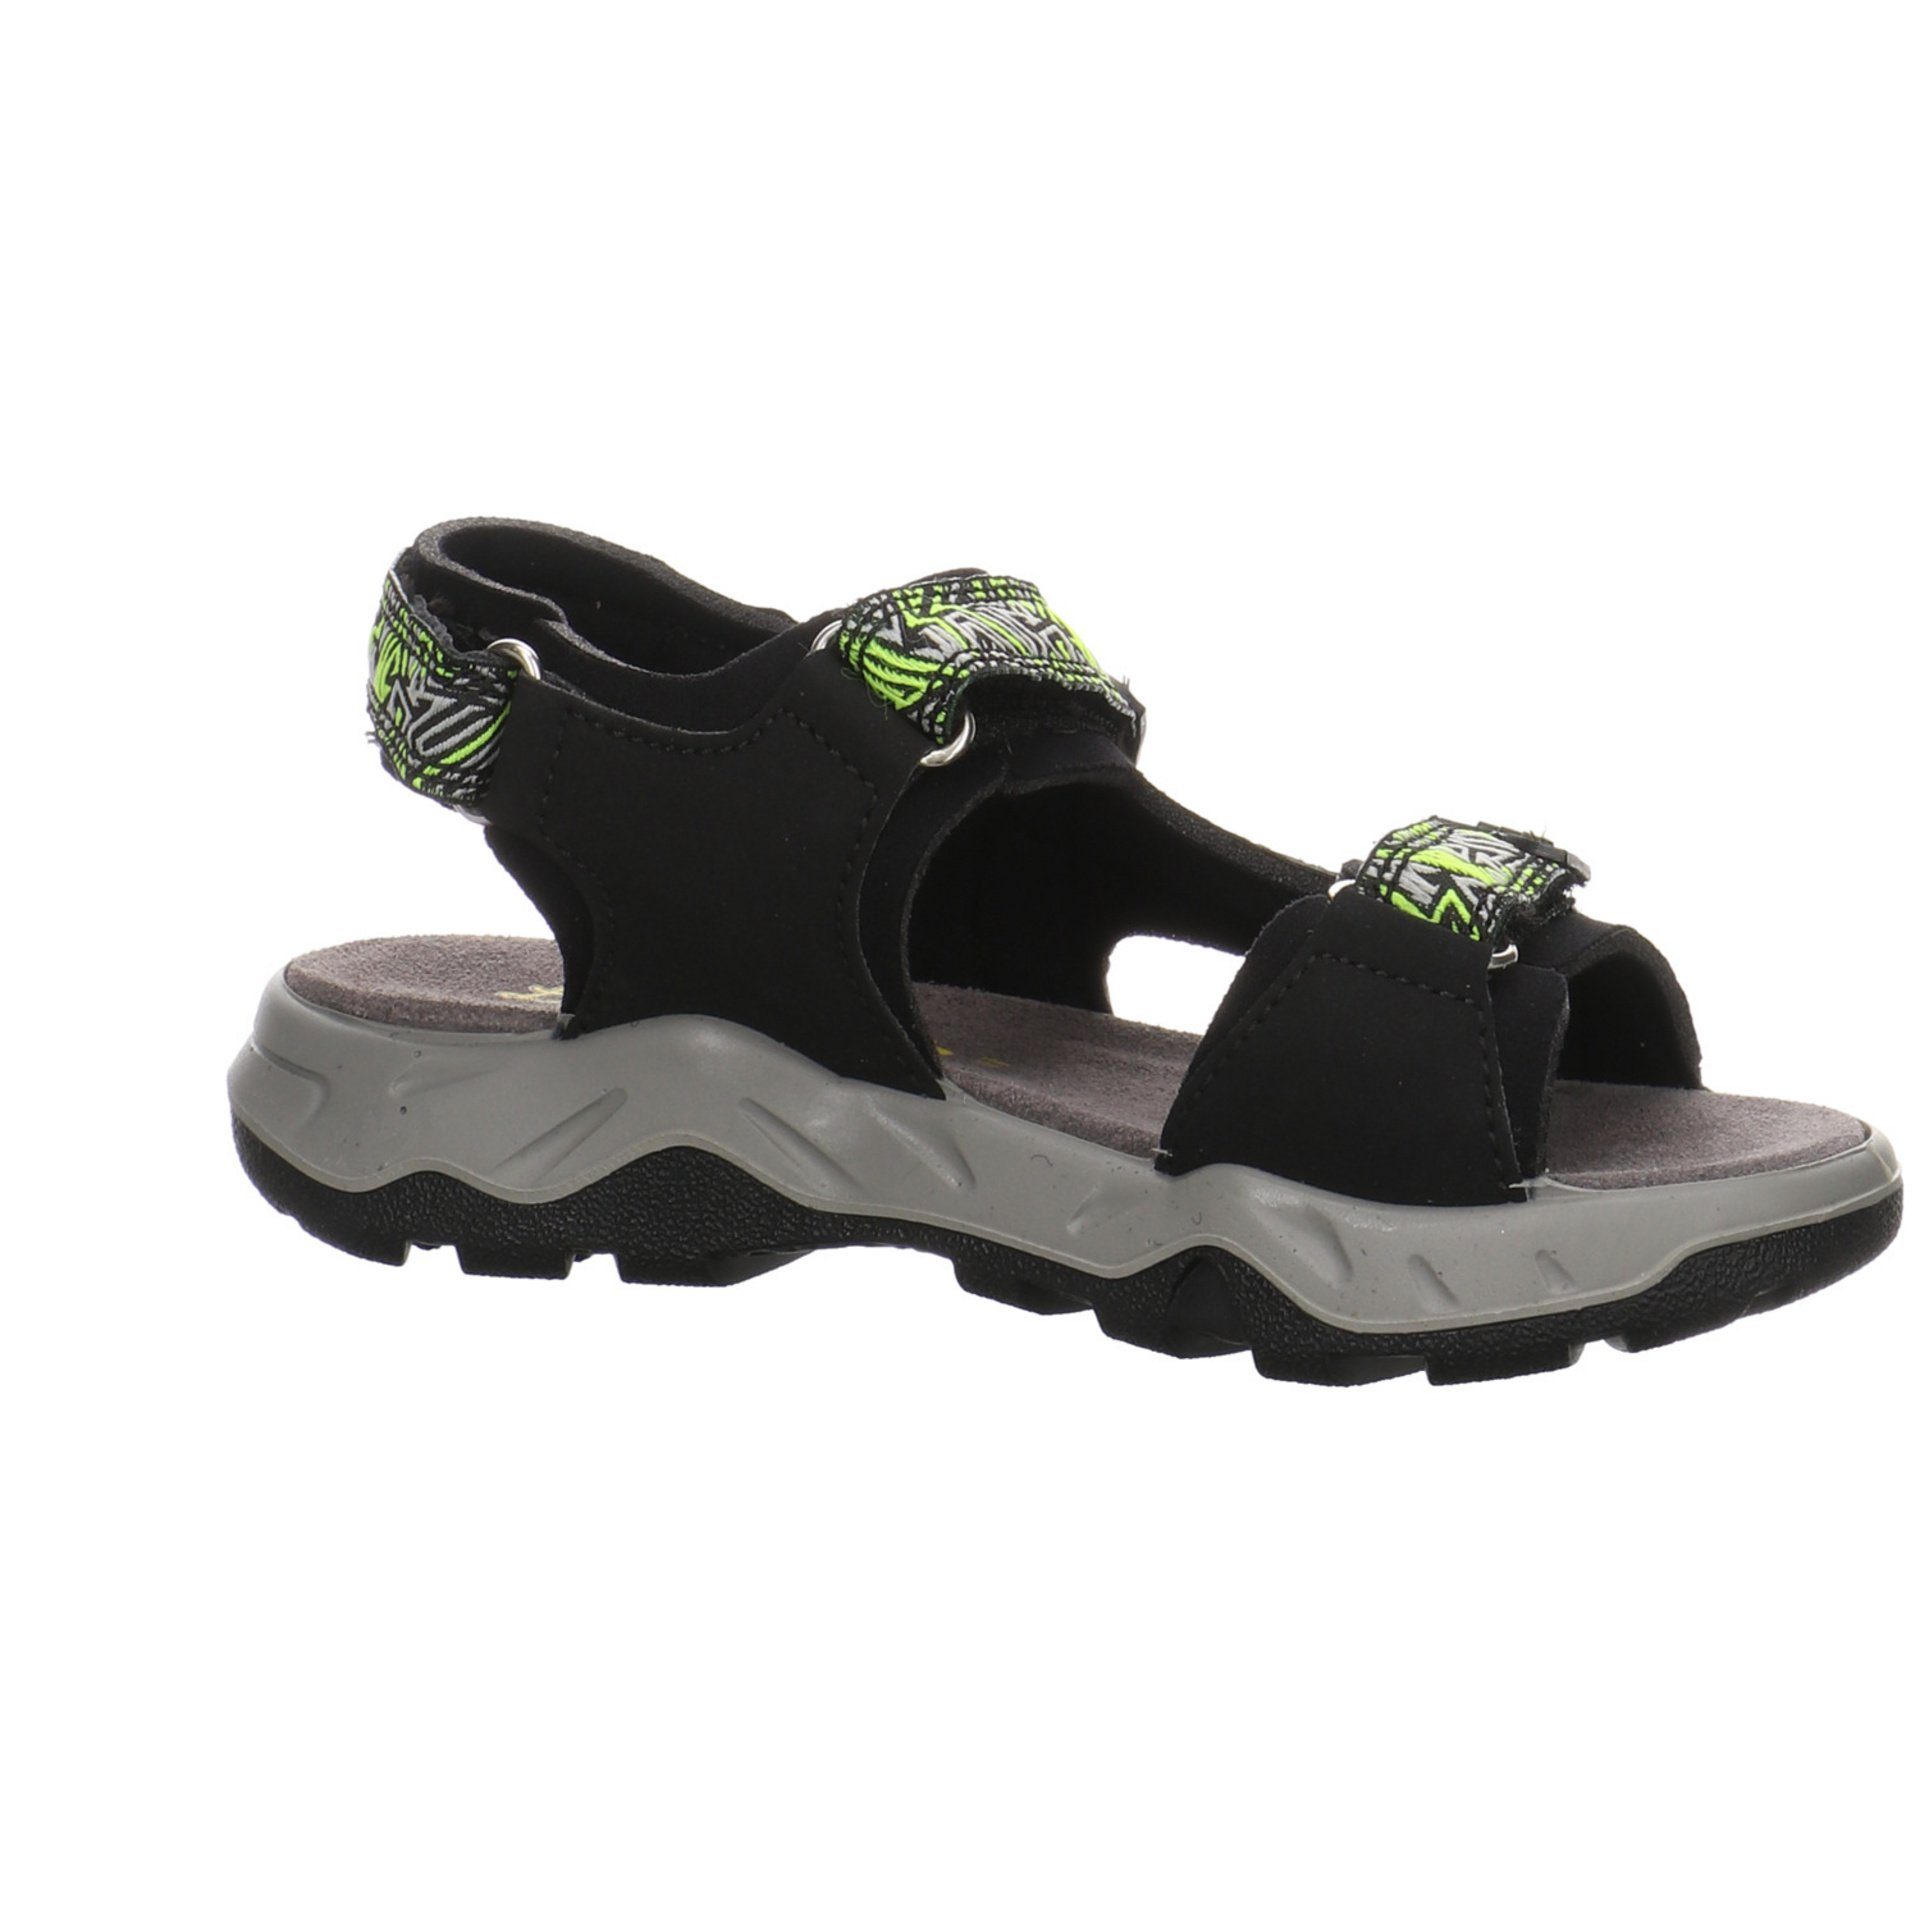 Salamander Lurchi Jungen Sandalen Sandale Schuhe Black Synthetikkombination Sandale Kinderschuhe Multi Odono